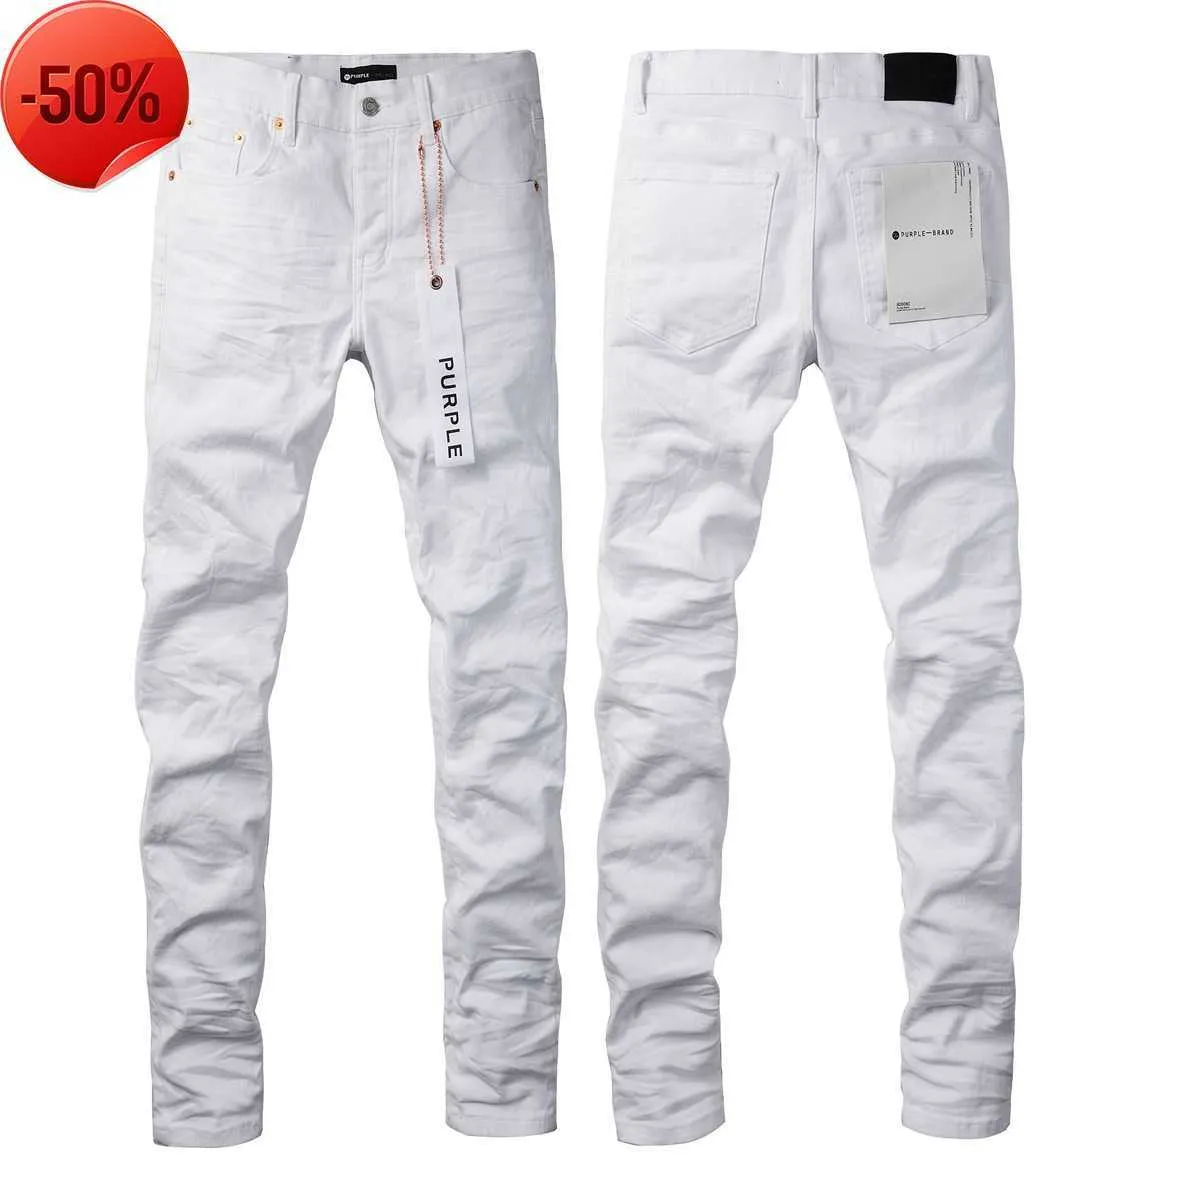 Jeans de diseñador Jeans de marca púrpura High Street White 9024 Jeans para hombres Jeans de marca de moda Jeans morados